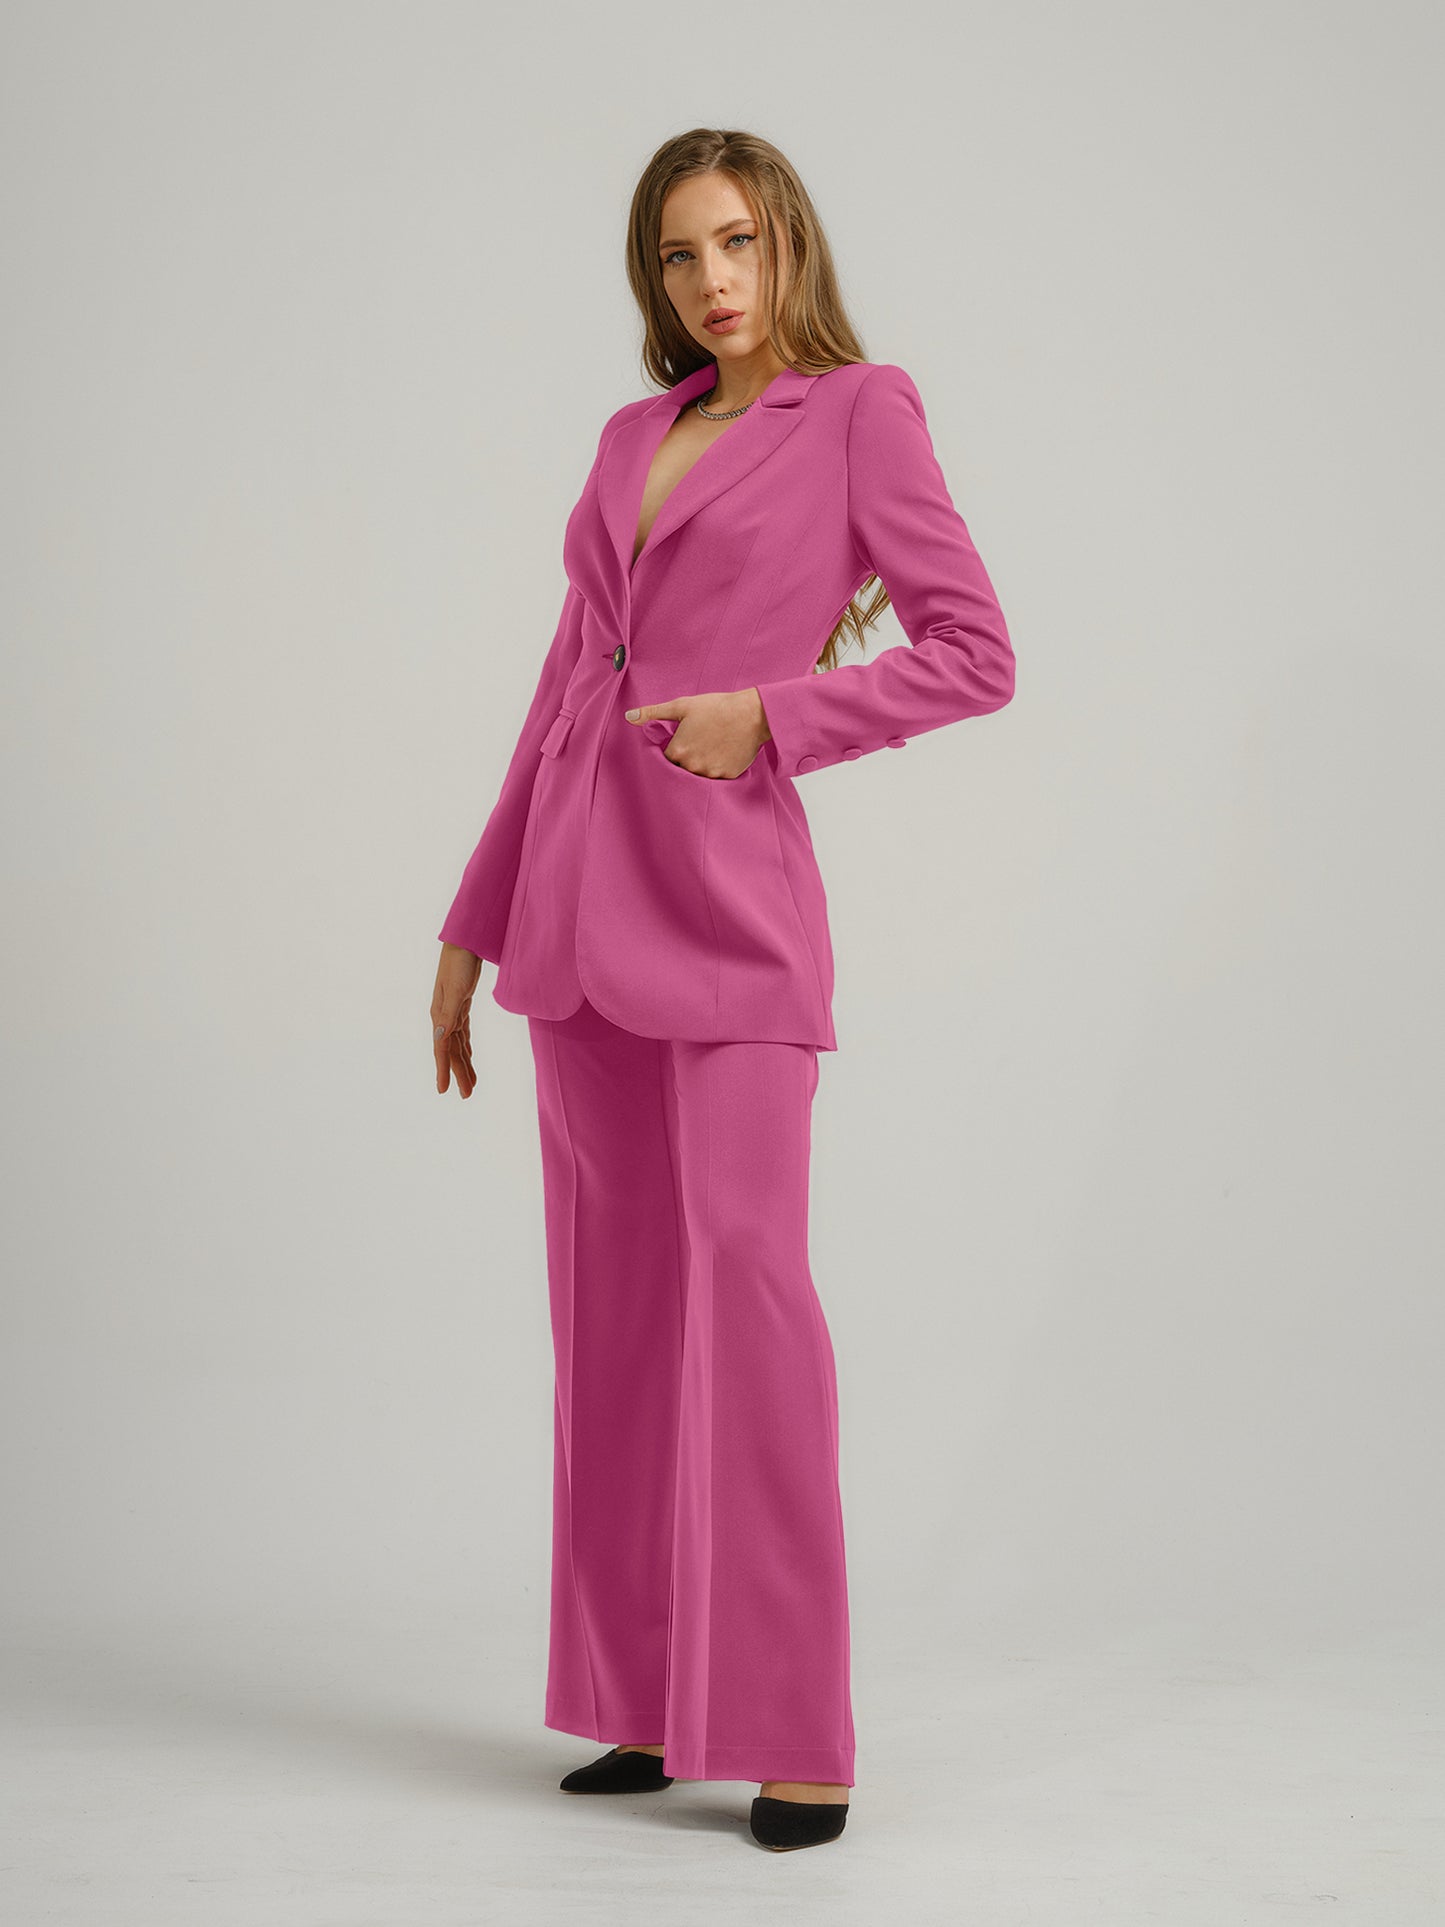 Sweet Desire Timeless Classic Blazer by Tia Dorraine Women's Luxury Fashion Designer Clothing Brand